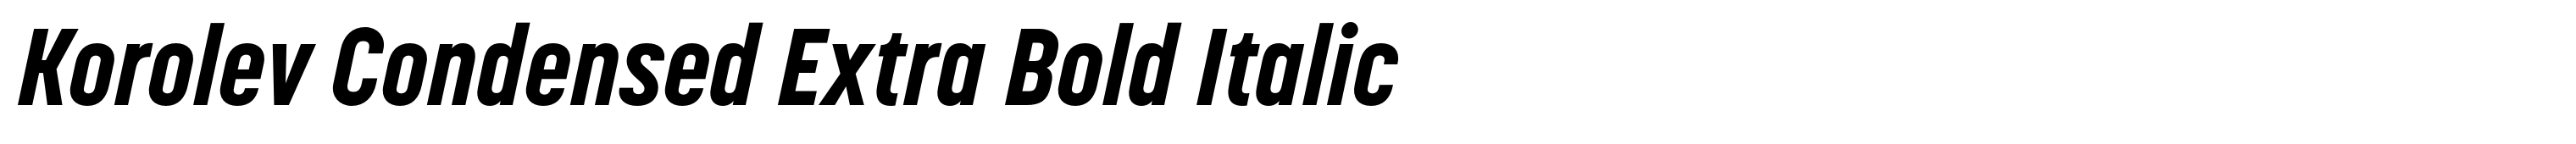 Korolev Condensed Extra Bold Italic